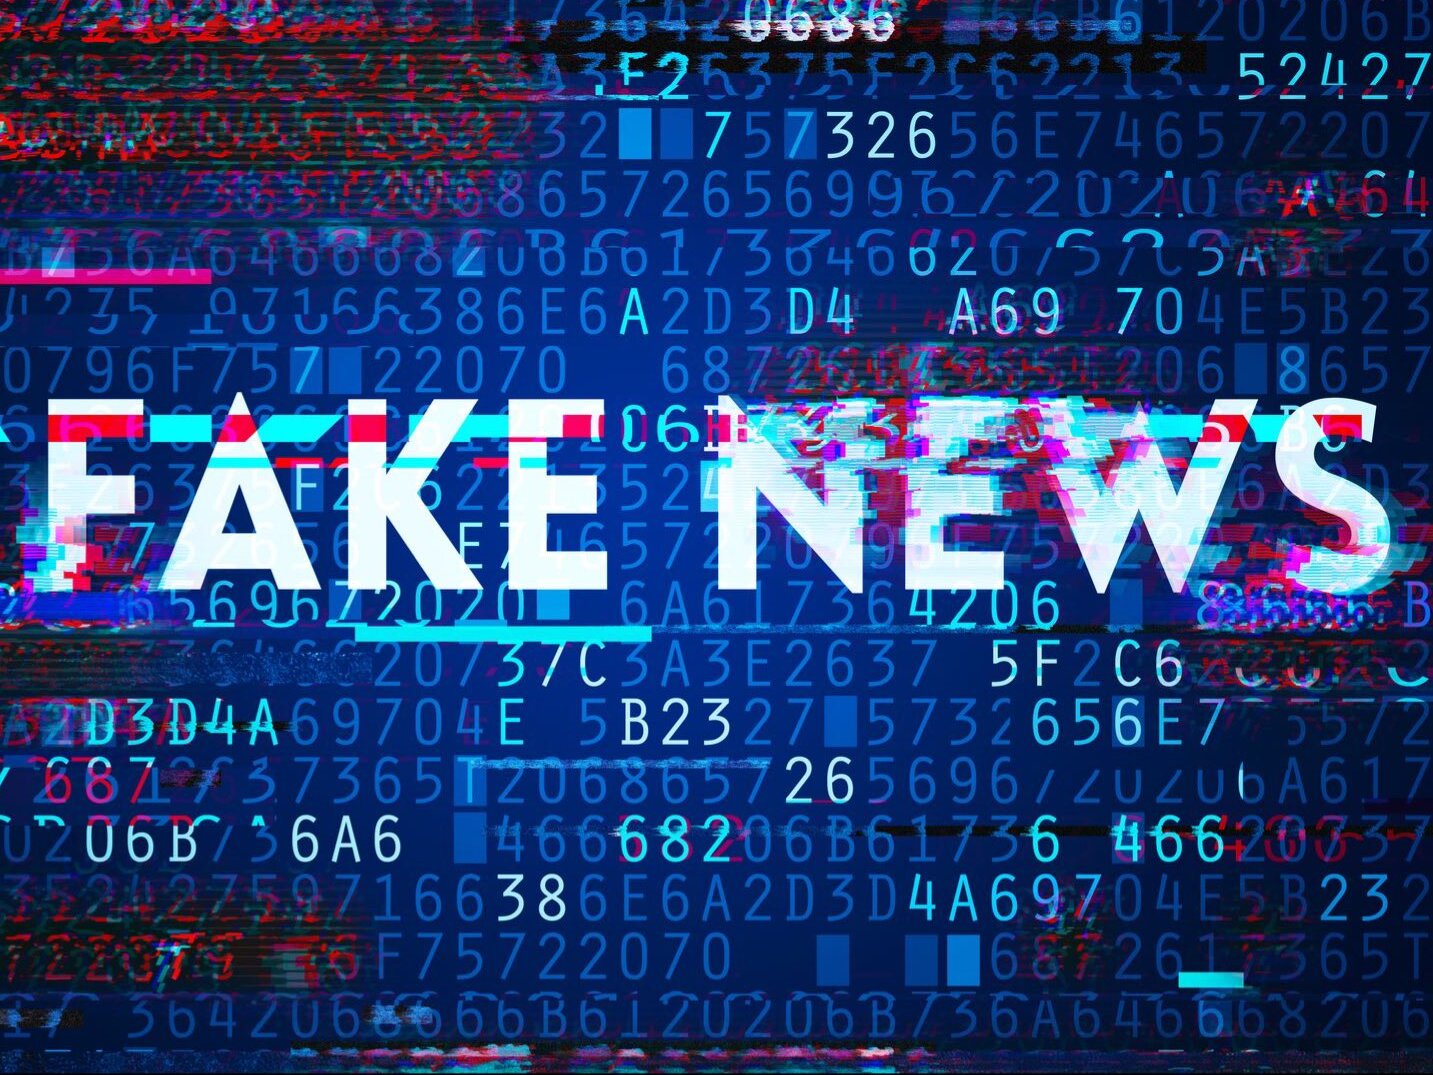 Fake News, Deepfakes and Social Media’s Influence